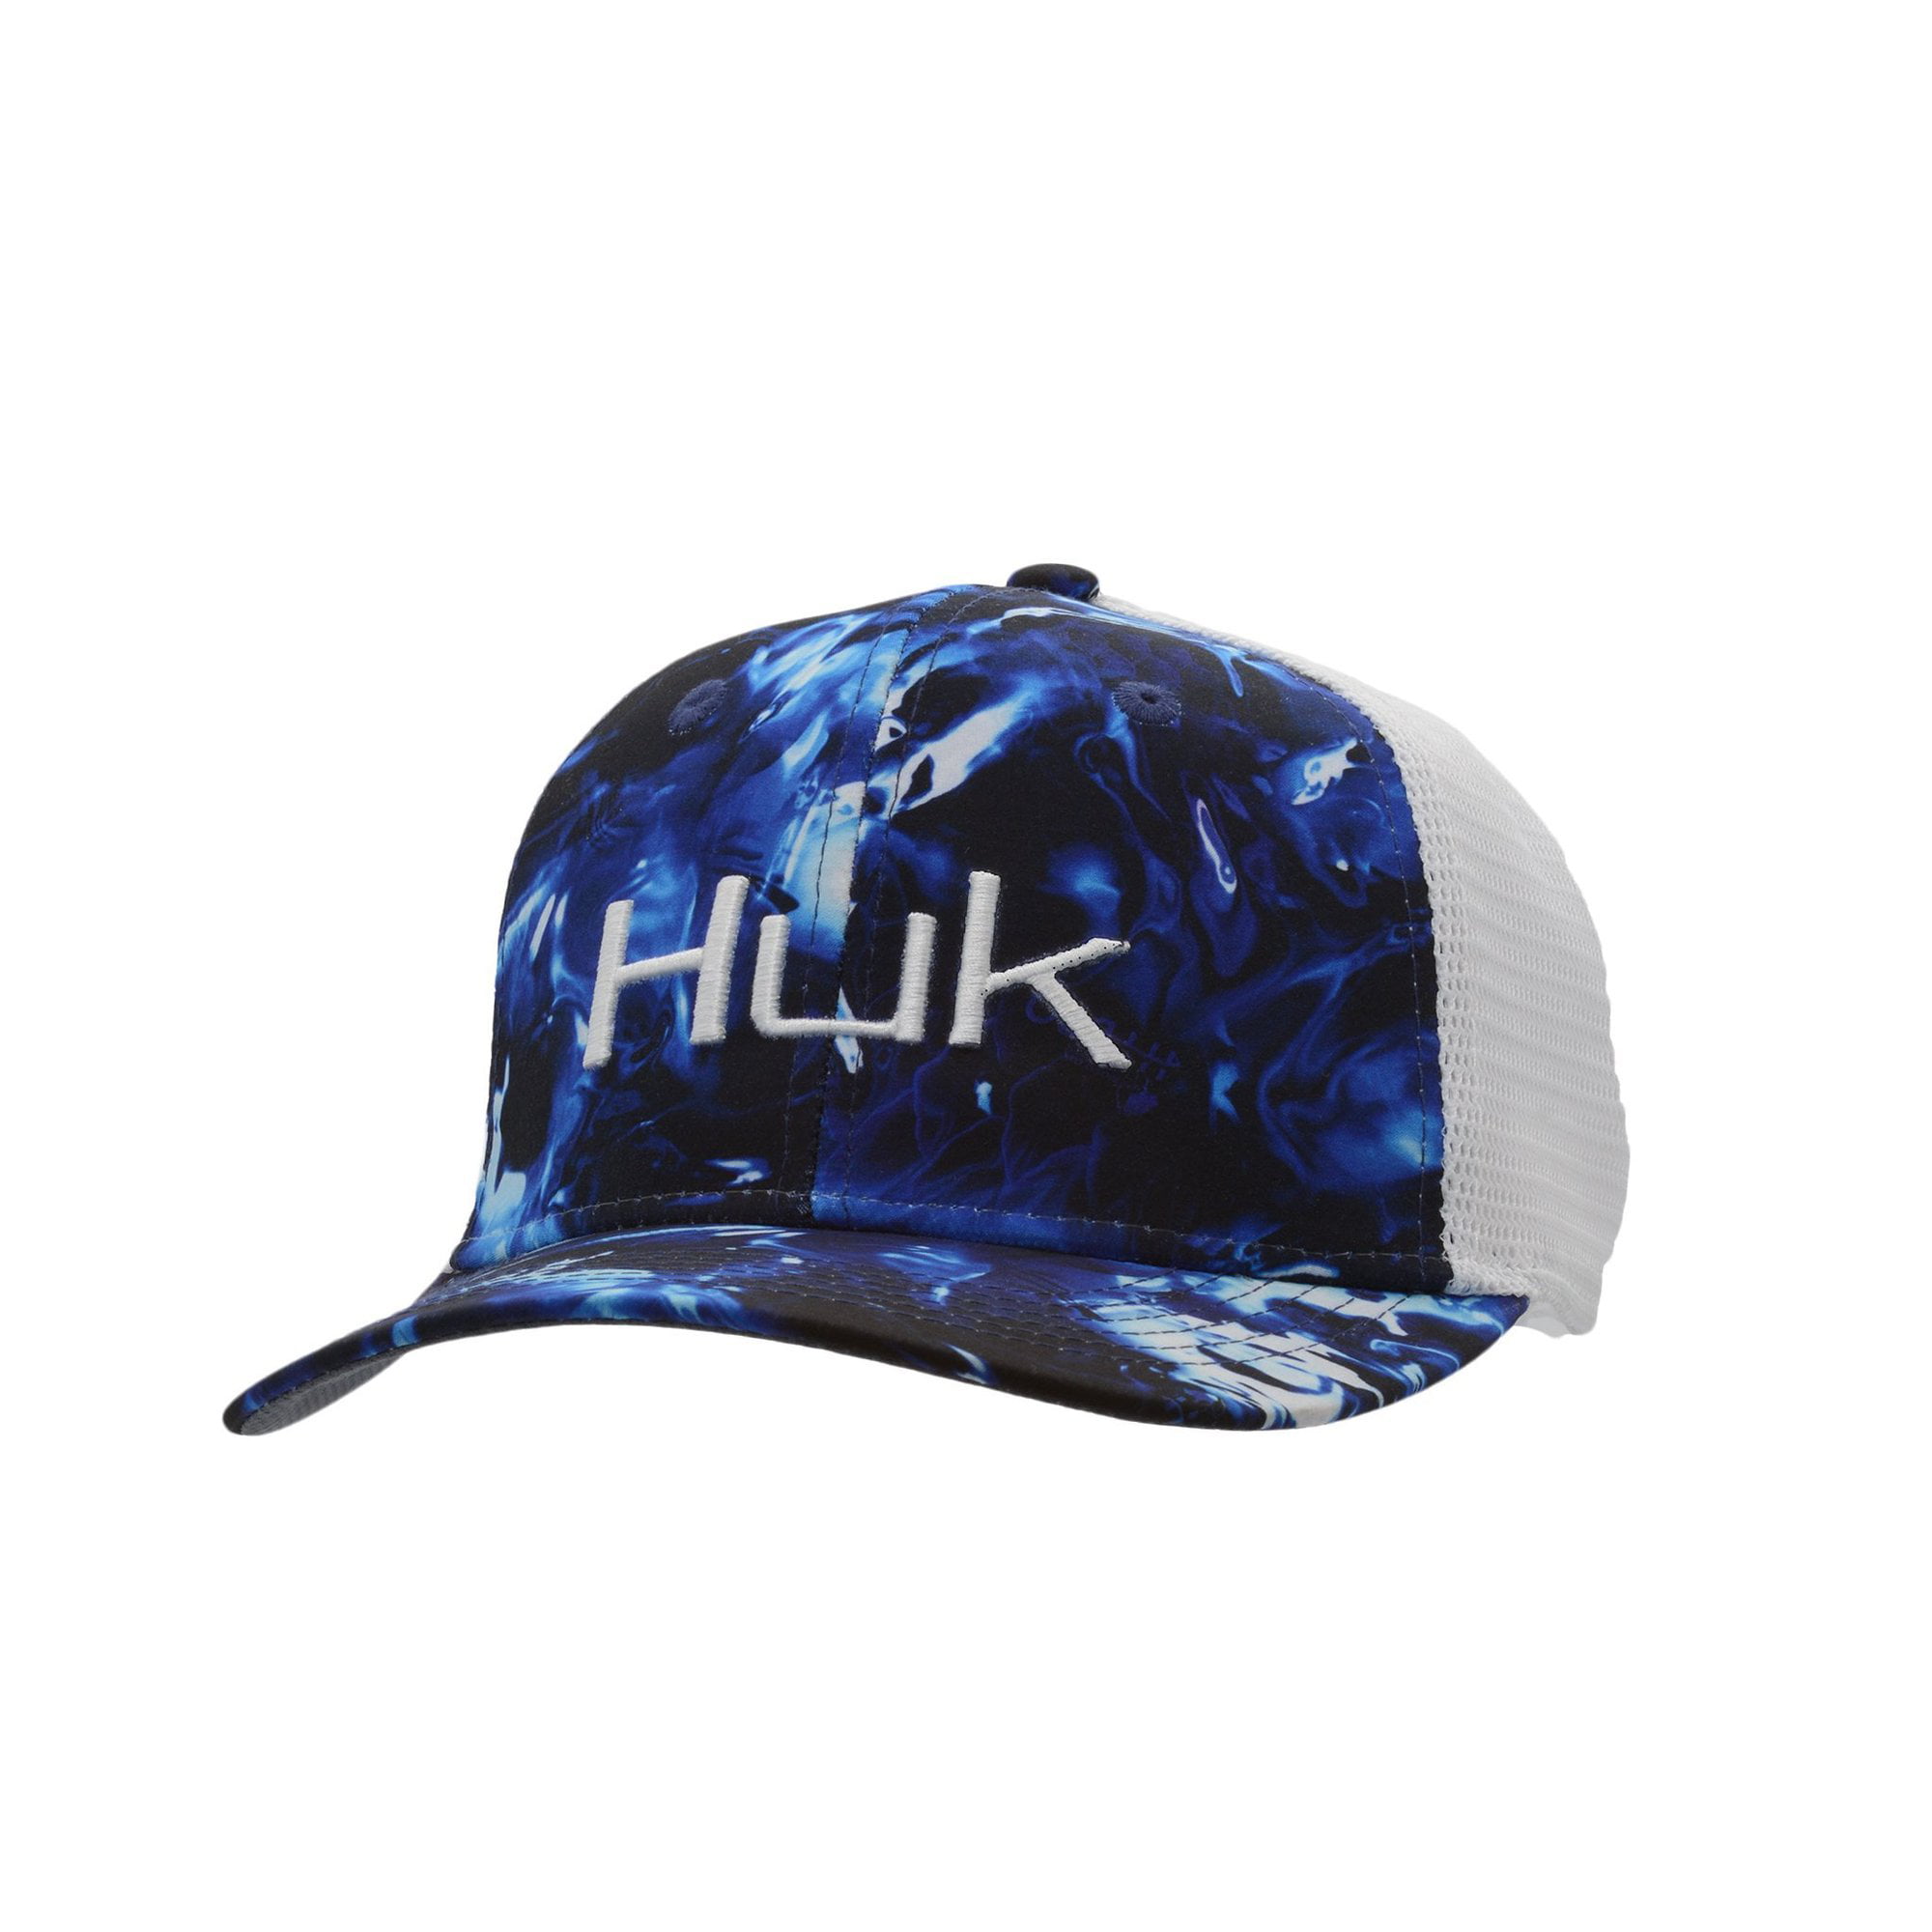 Huk Performance Fishing Head Gear Navy Blue/White Logo Trucker Cap Hat 